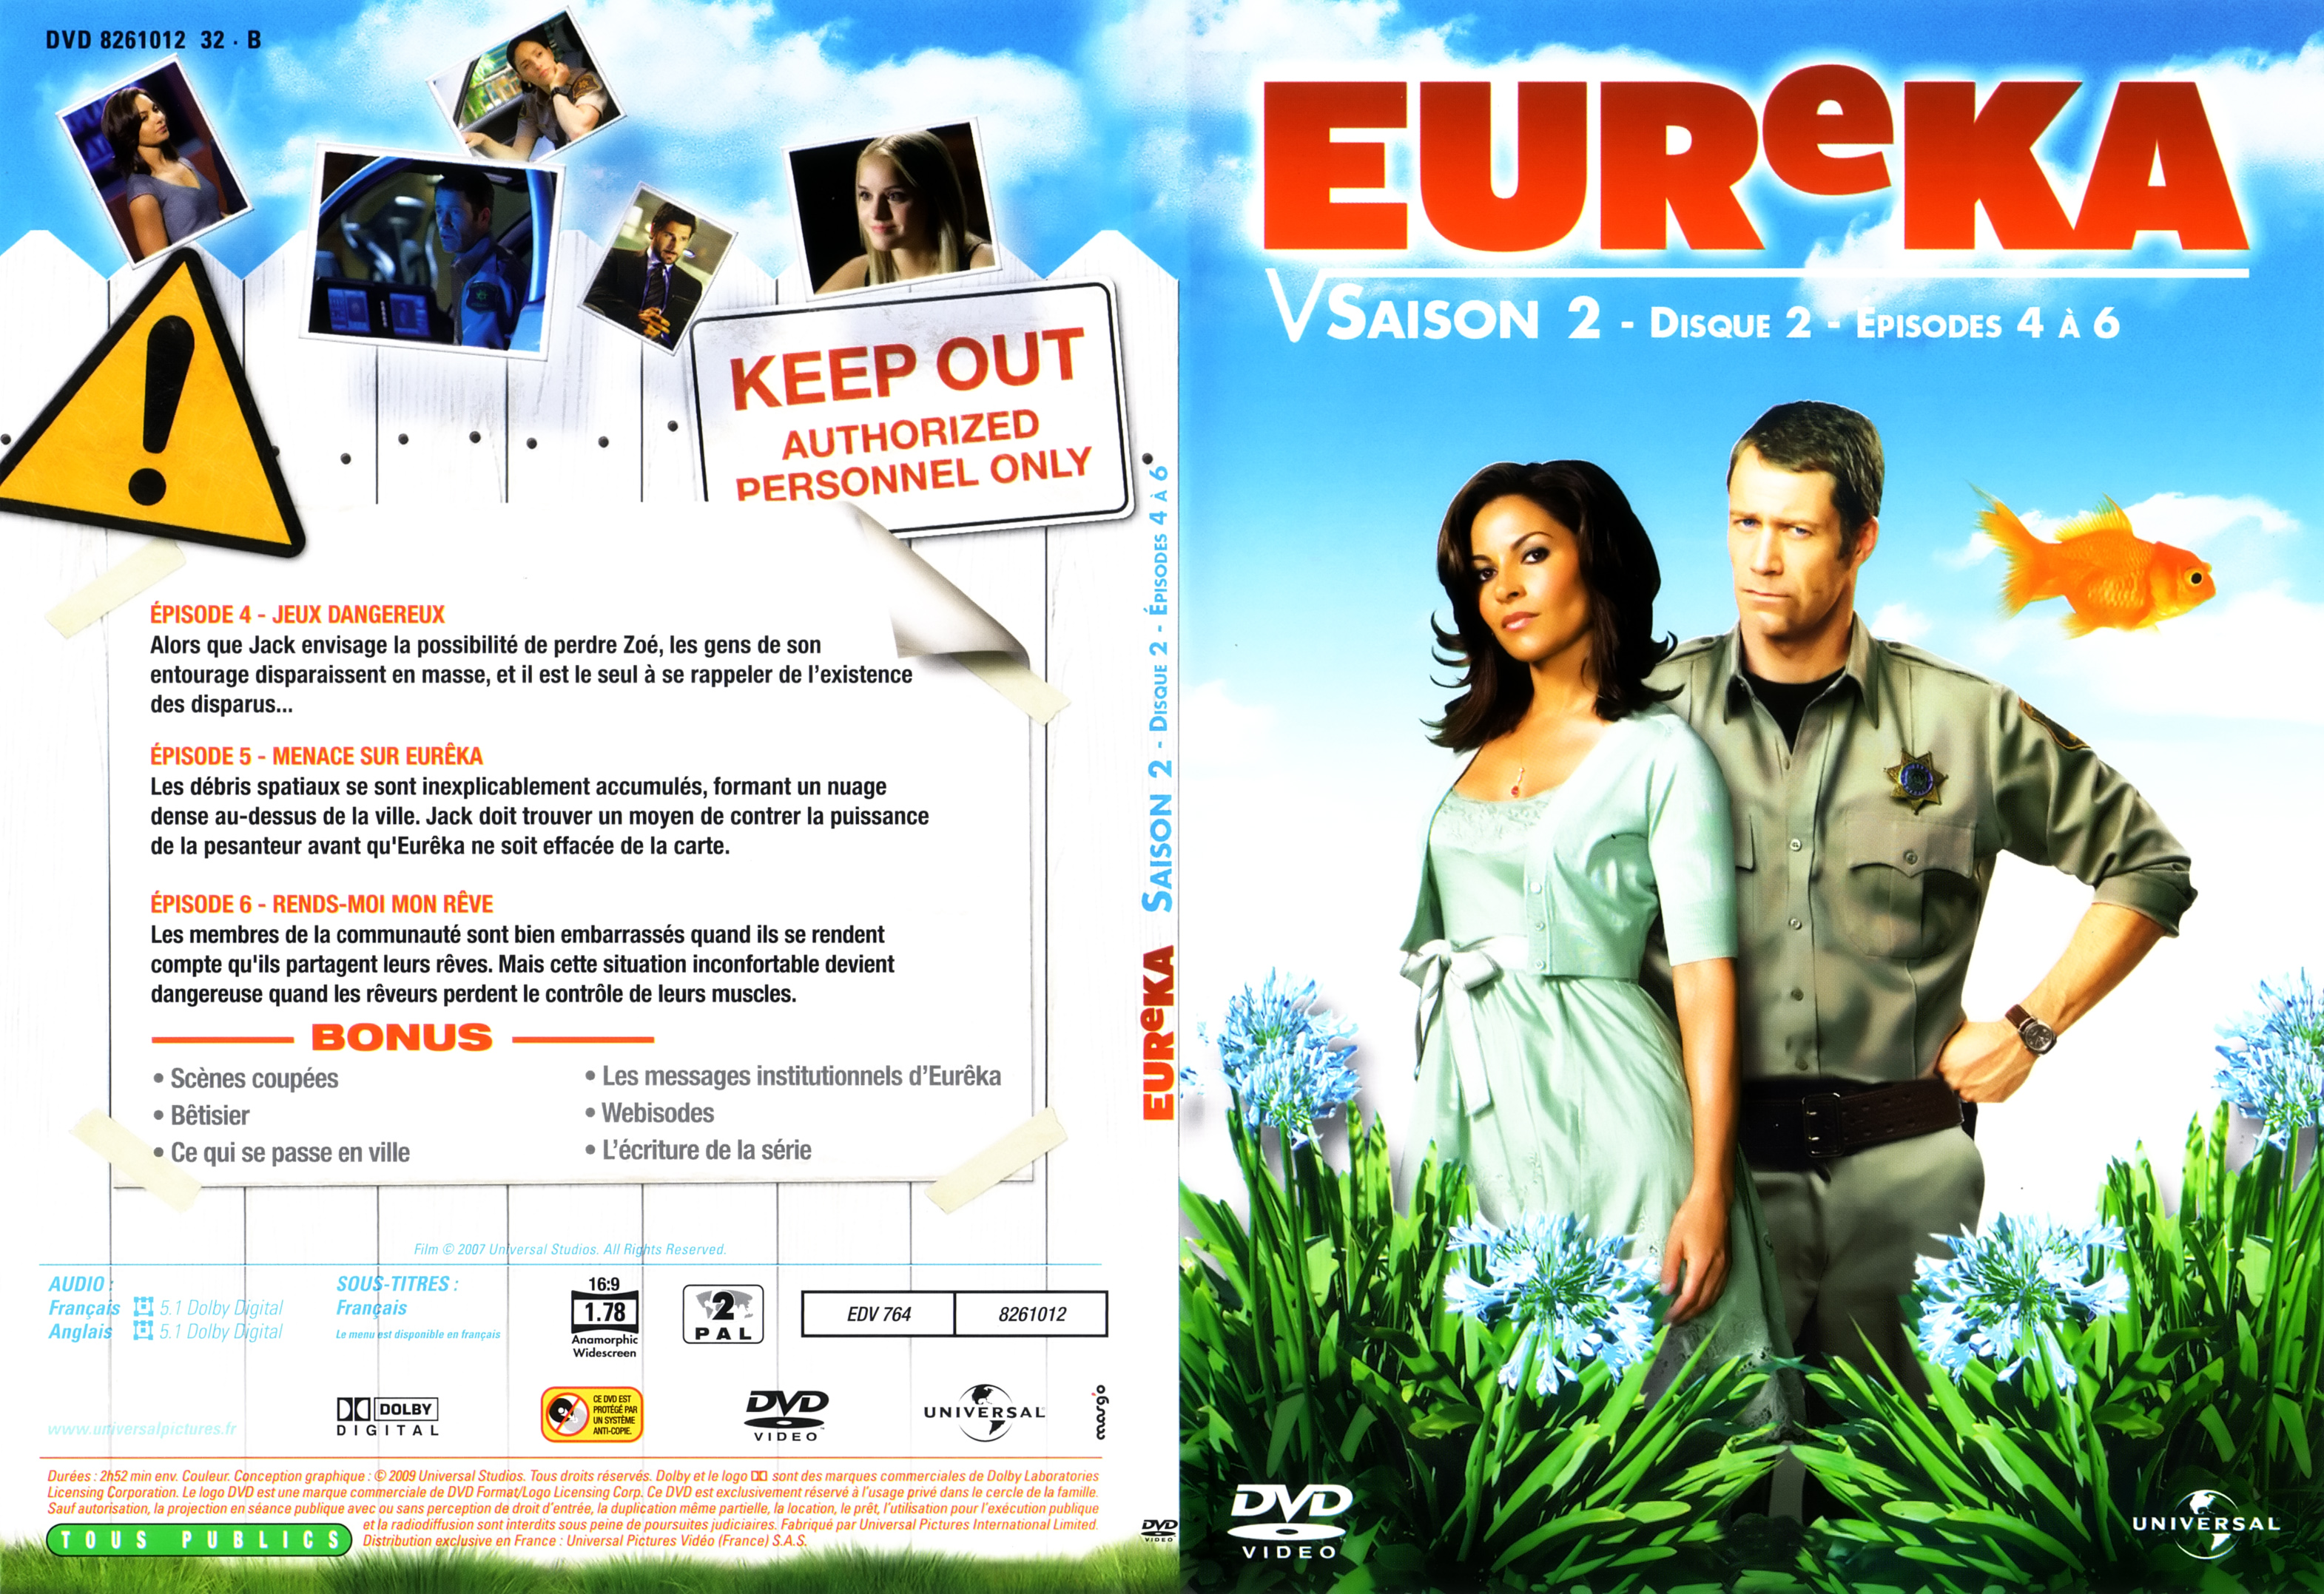 Jaquette DVD Eureka saison 2 DVD 2